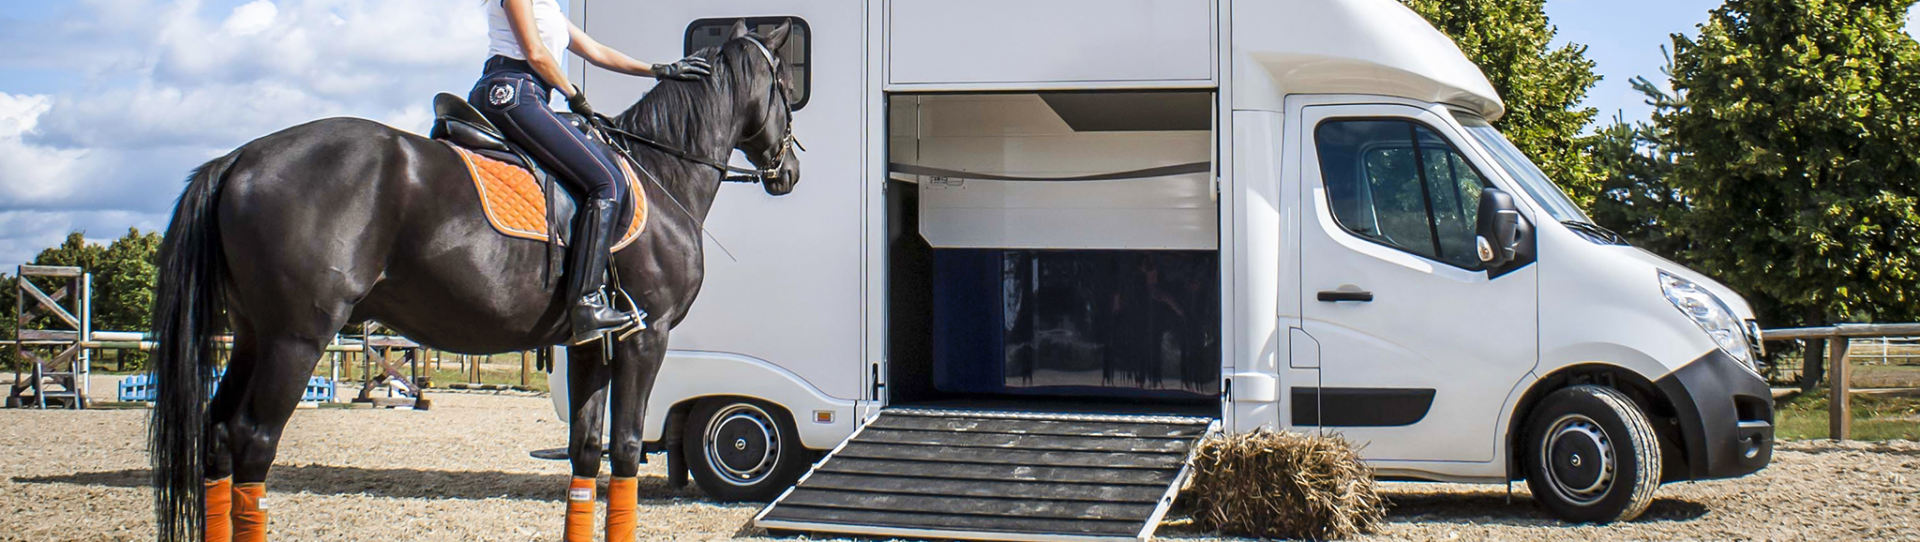 animal transport renault master - horse